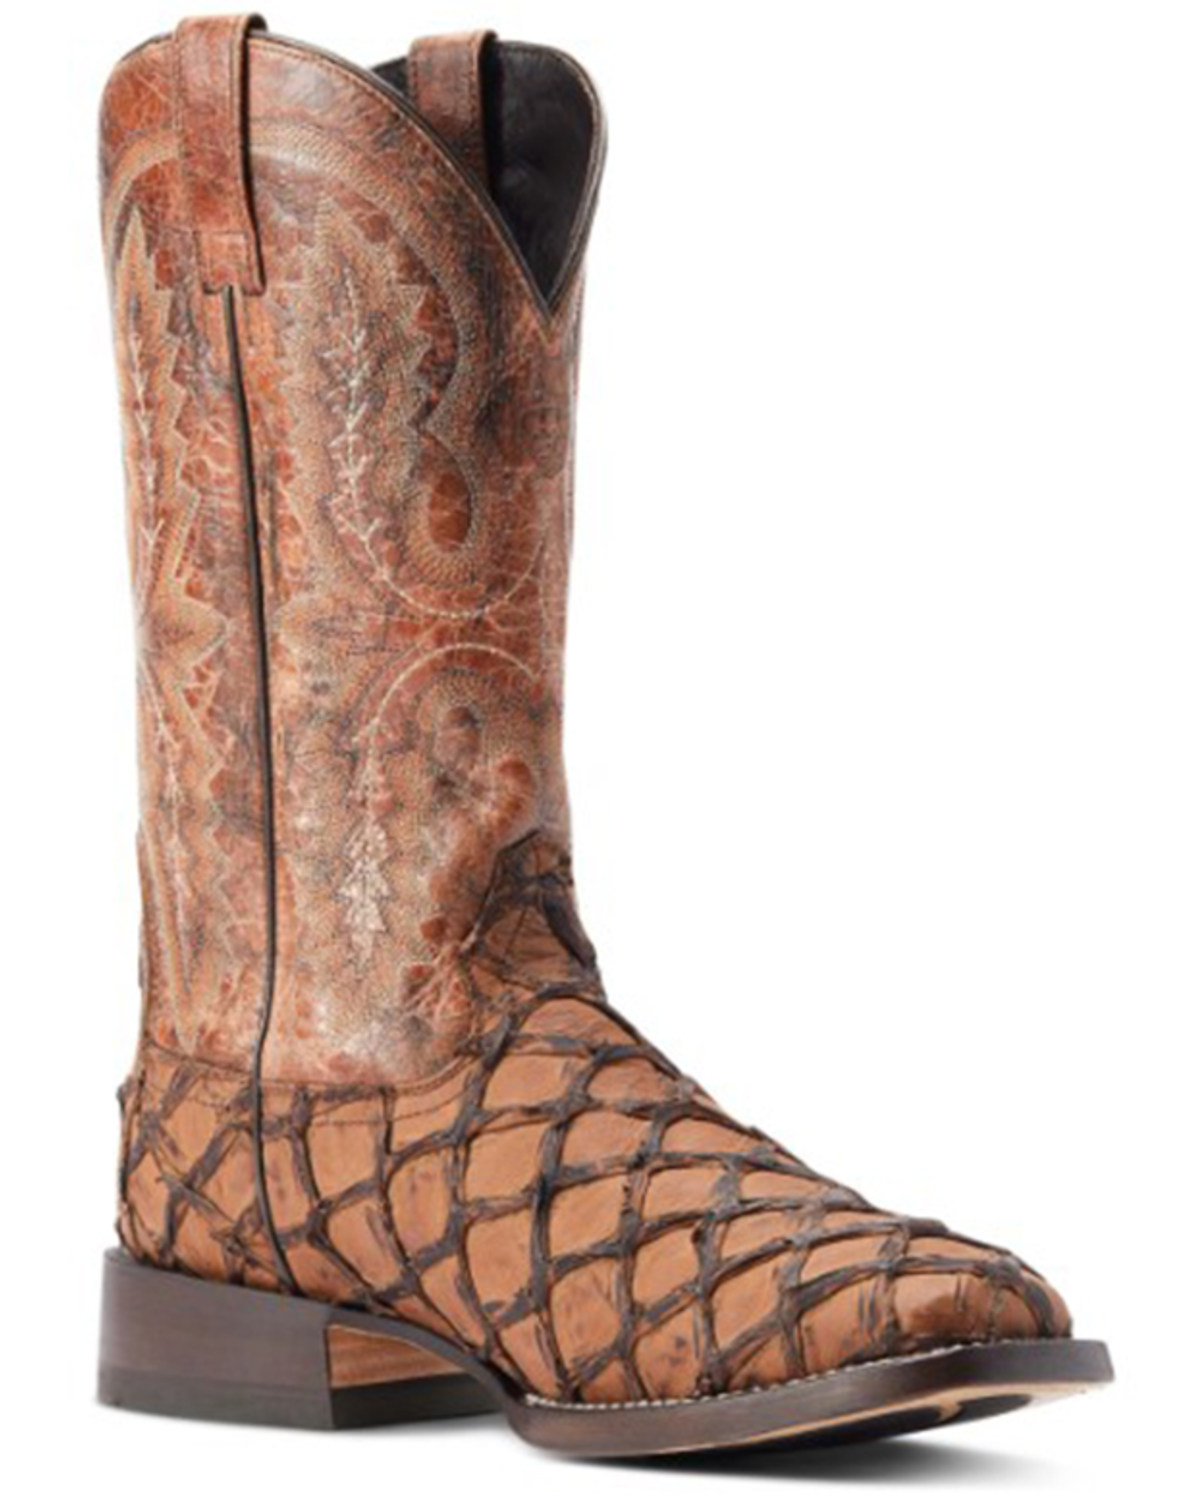 Ariat Men's Deep Water Exotic Pirarucu Western Boots - Broad Square Toe